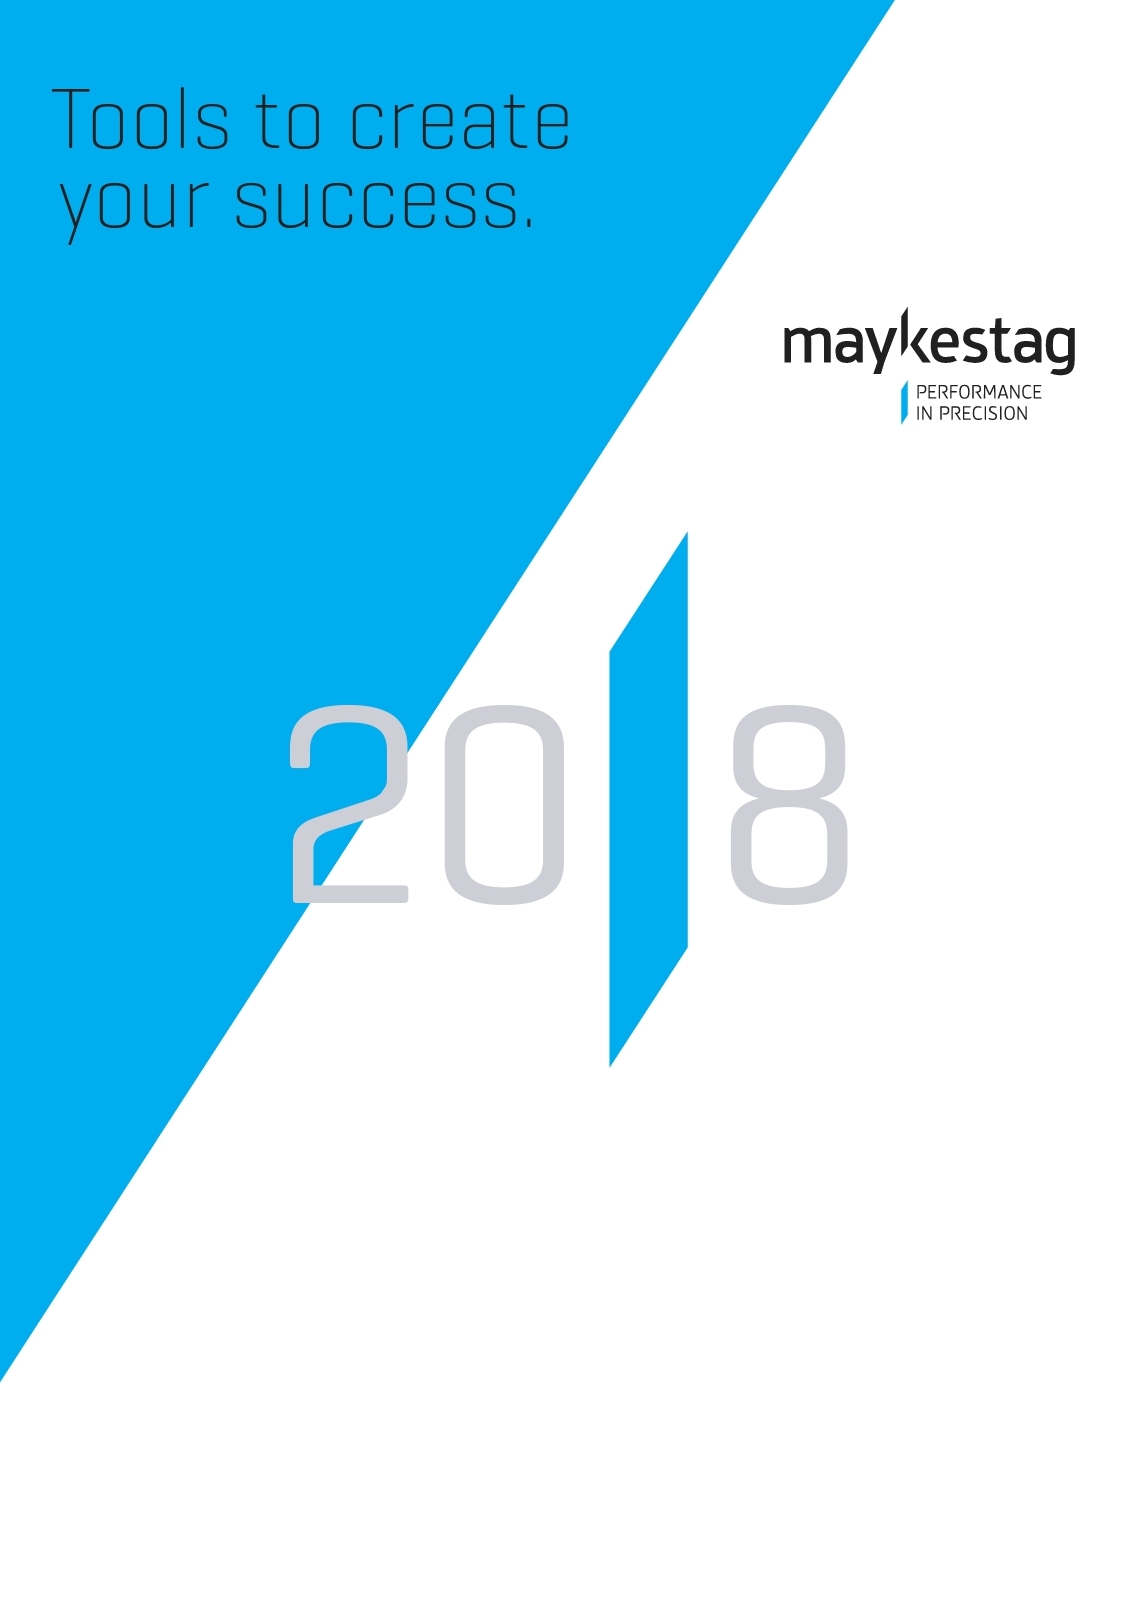 Maykestag by KuoteX - Maurizio Gianoglio